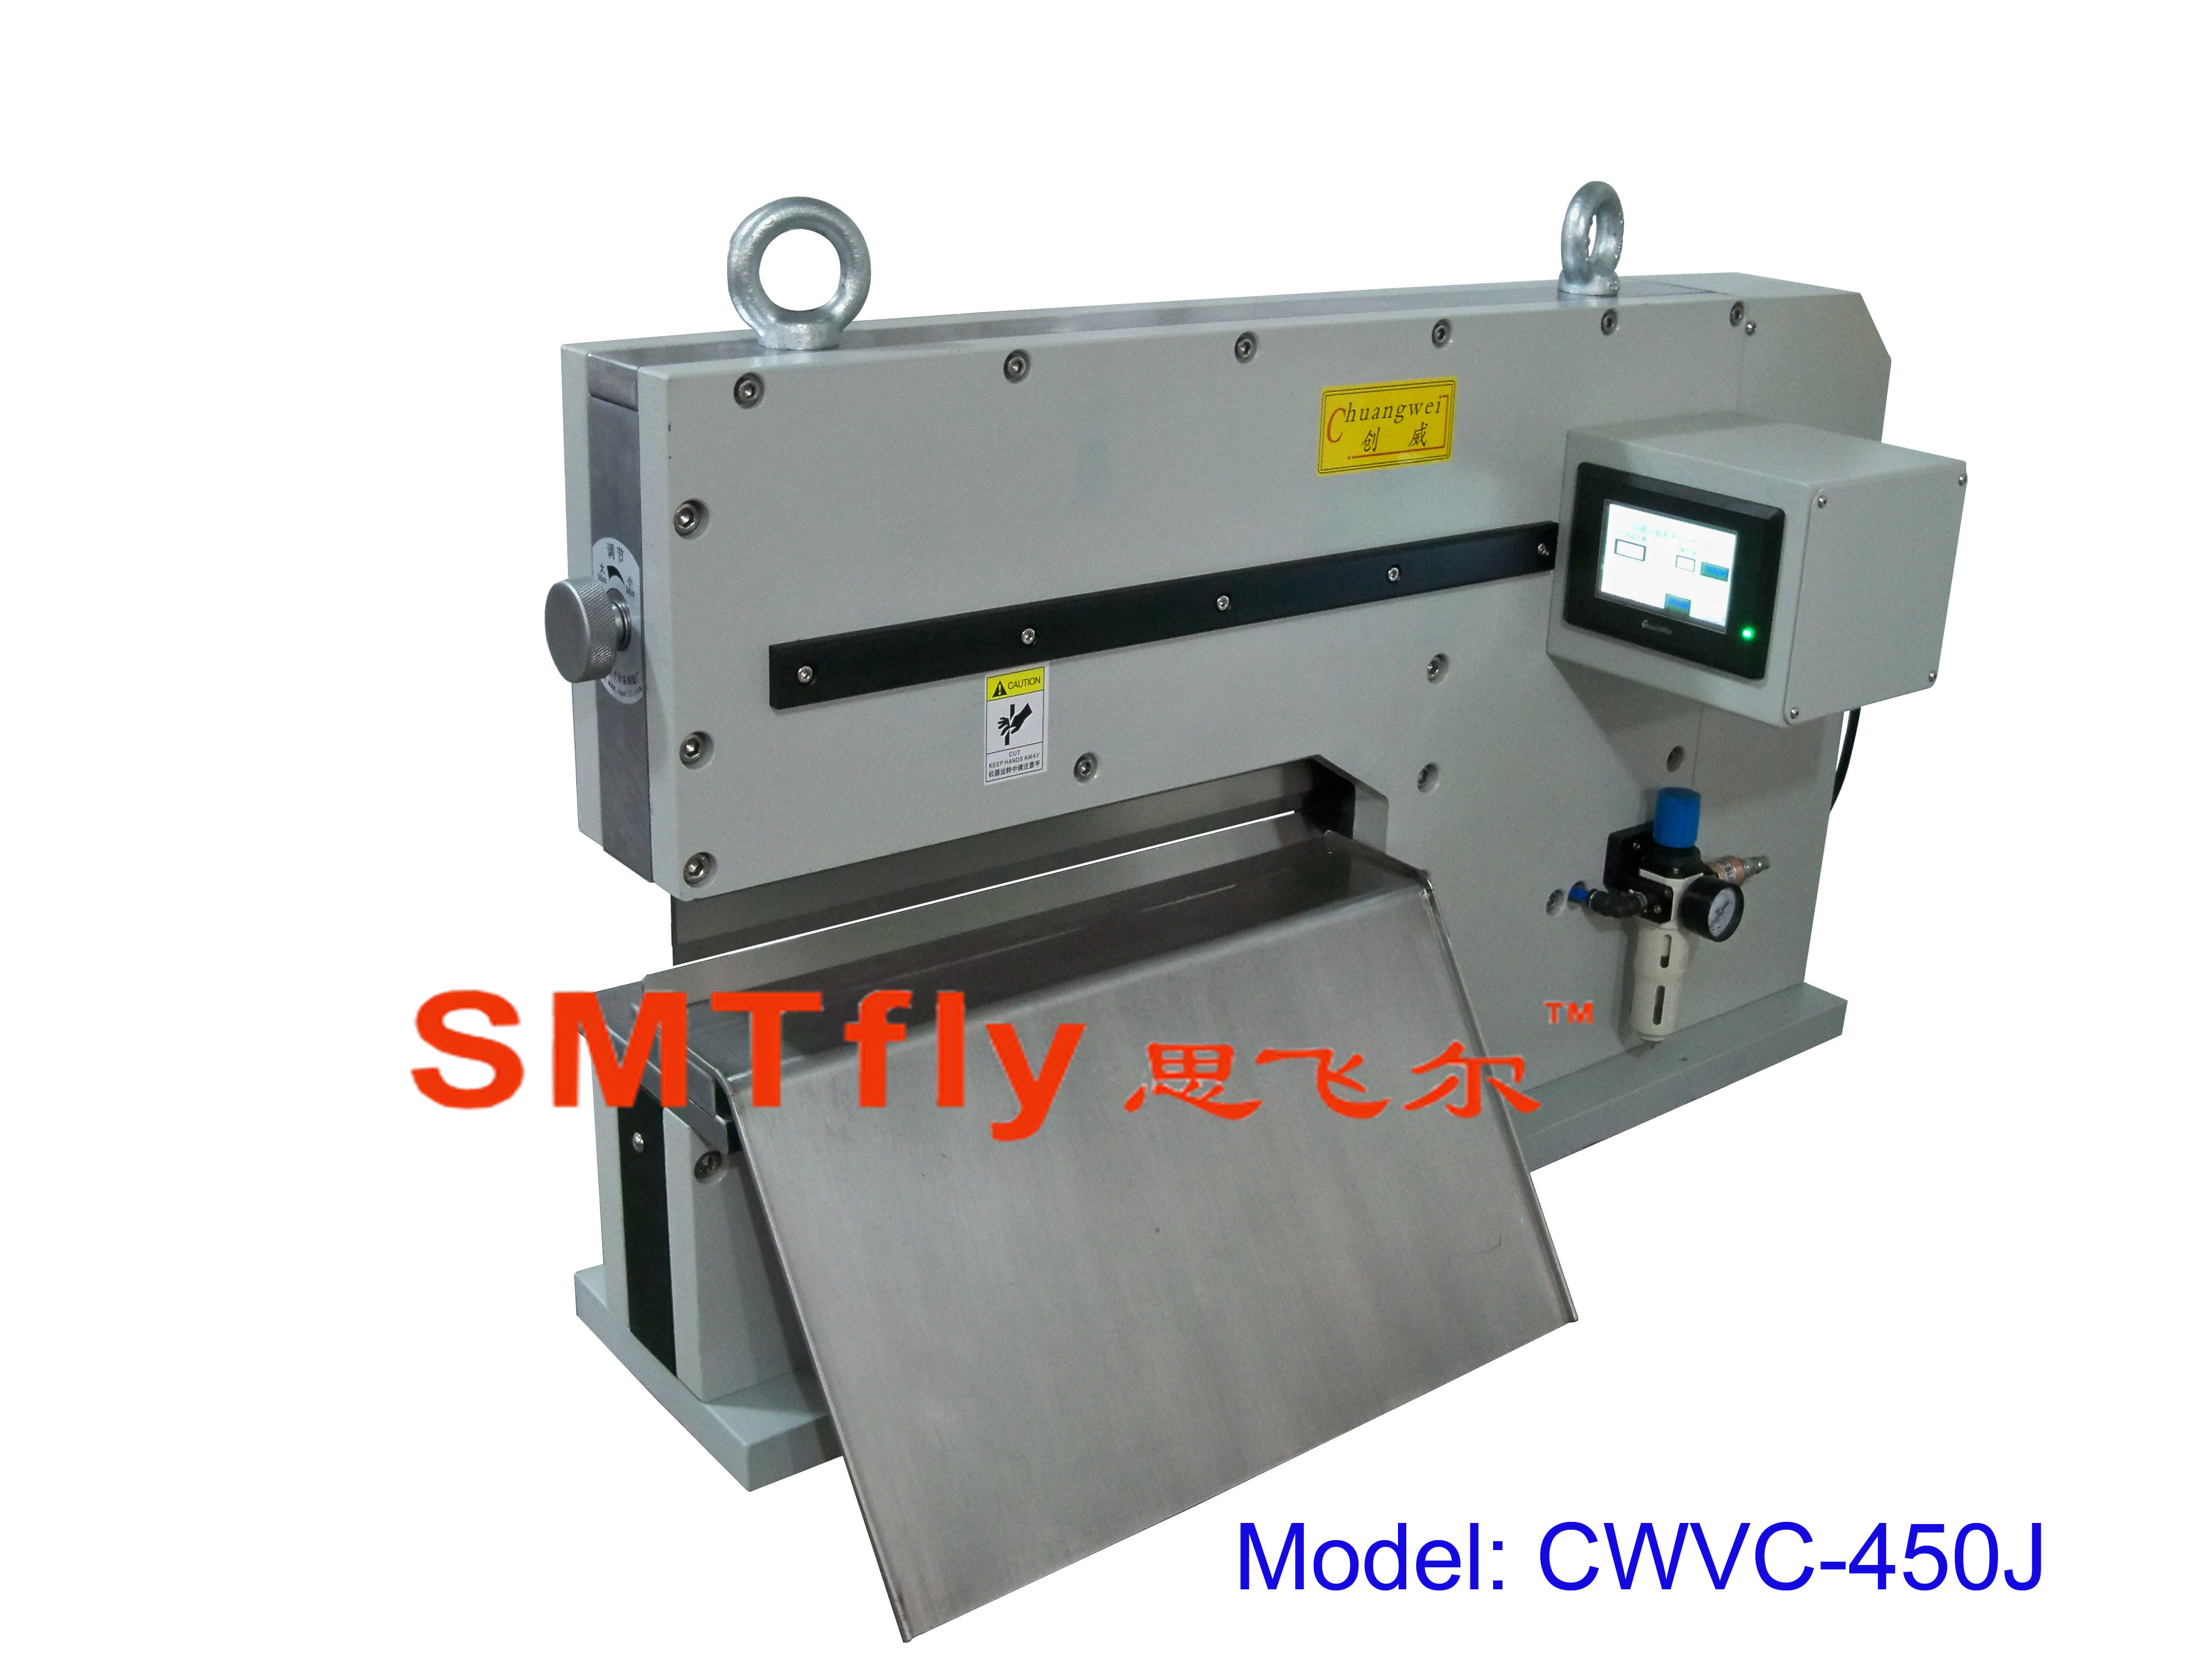 Fiberglass PCB Cutter,SMTfly-450J